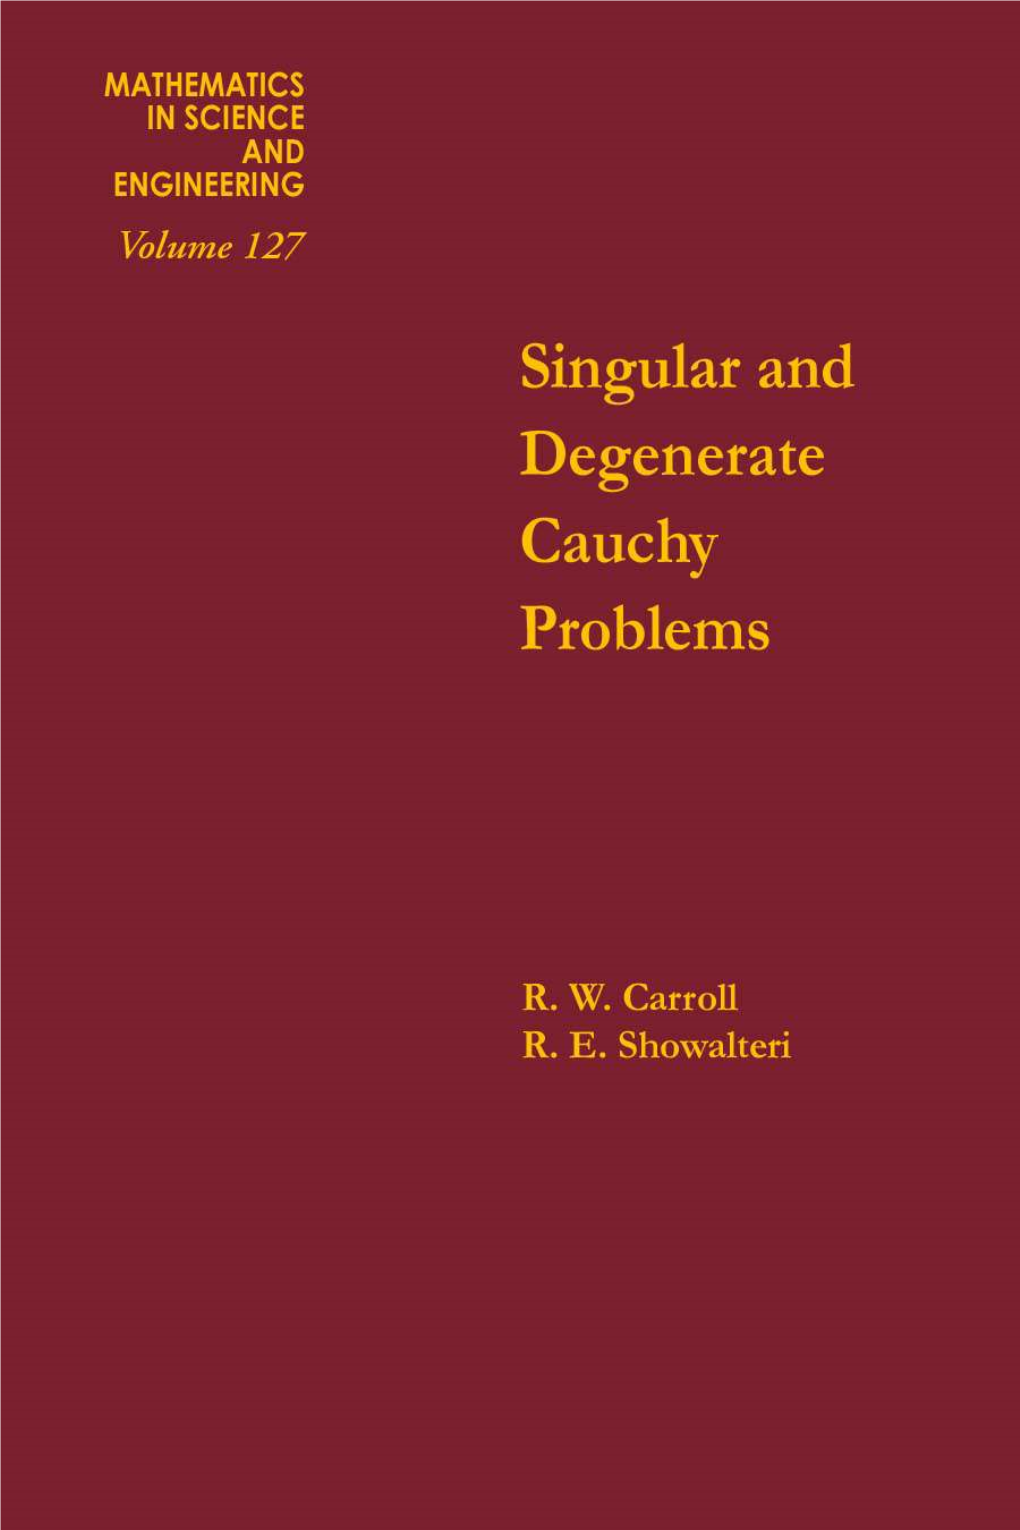 Singular and Degenerate Cauchy Problems ACADEMIC PRESS RAPID MANUSCRIPT REPRODUCTION